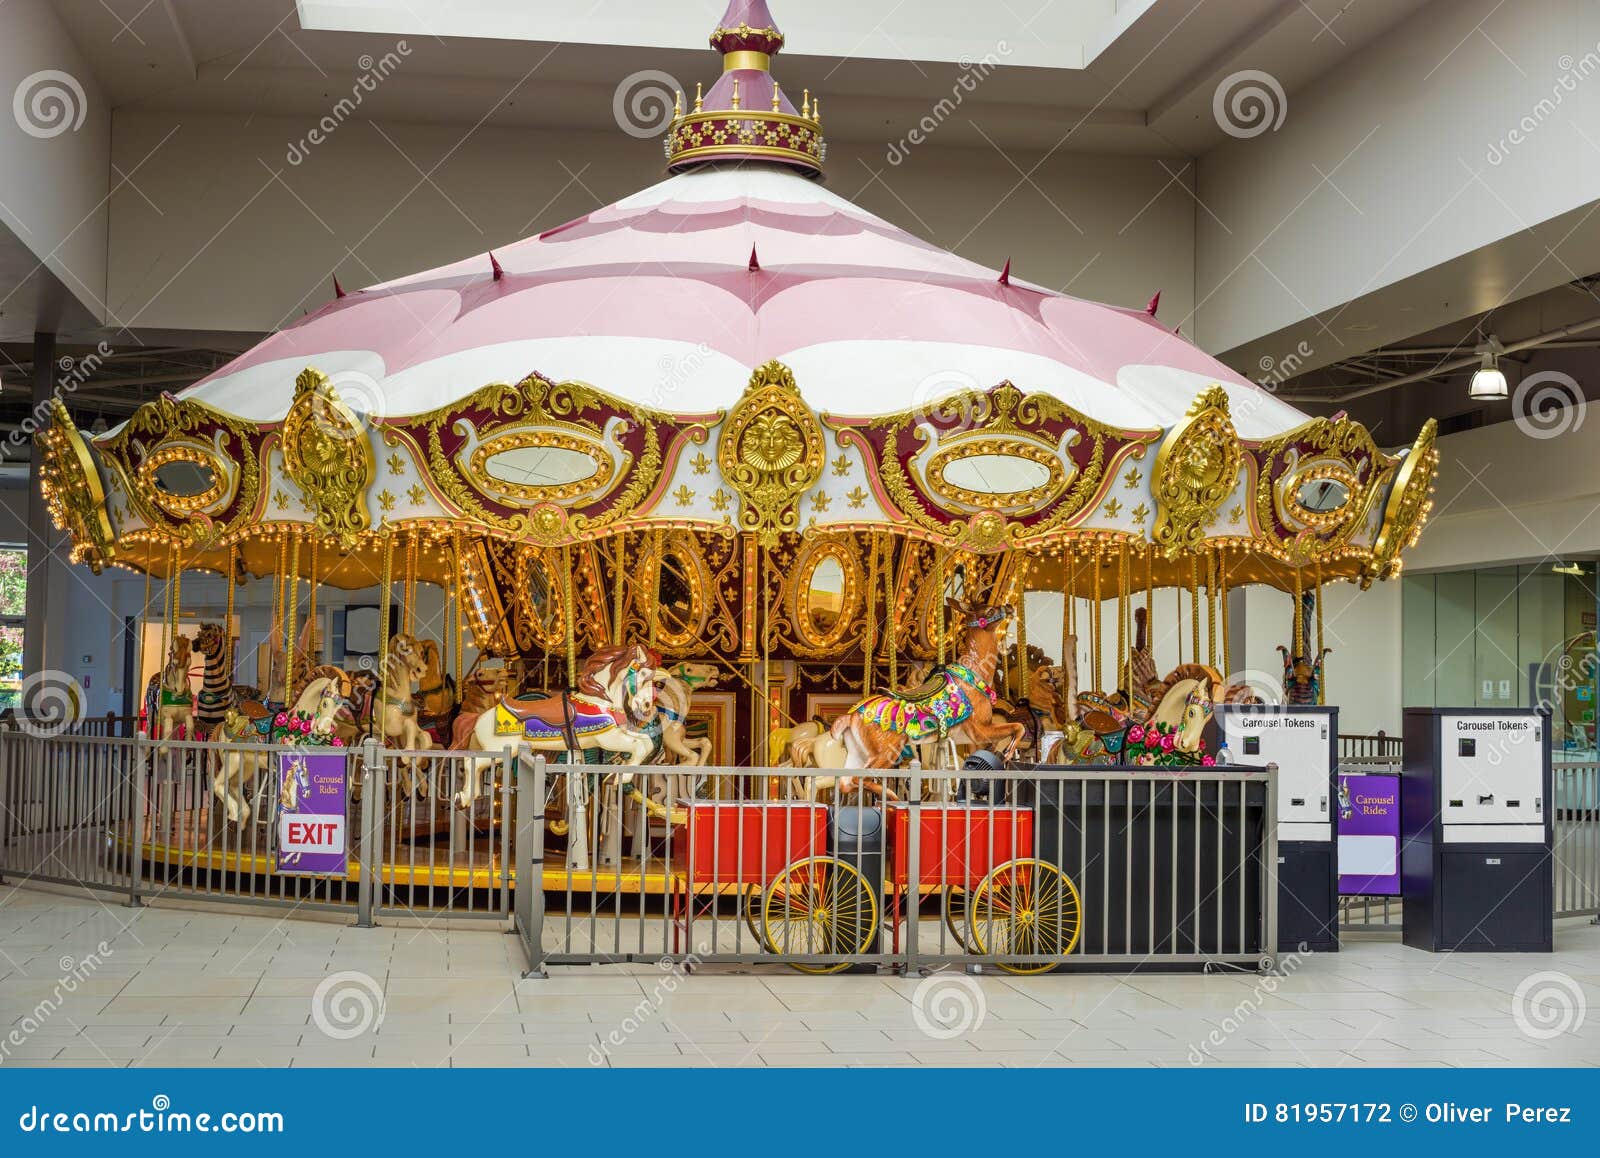 golden carousel ride